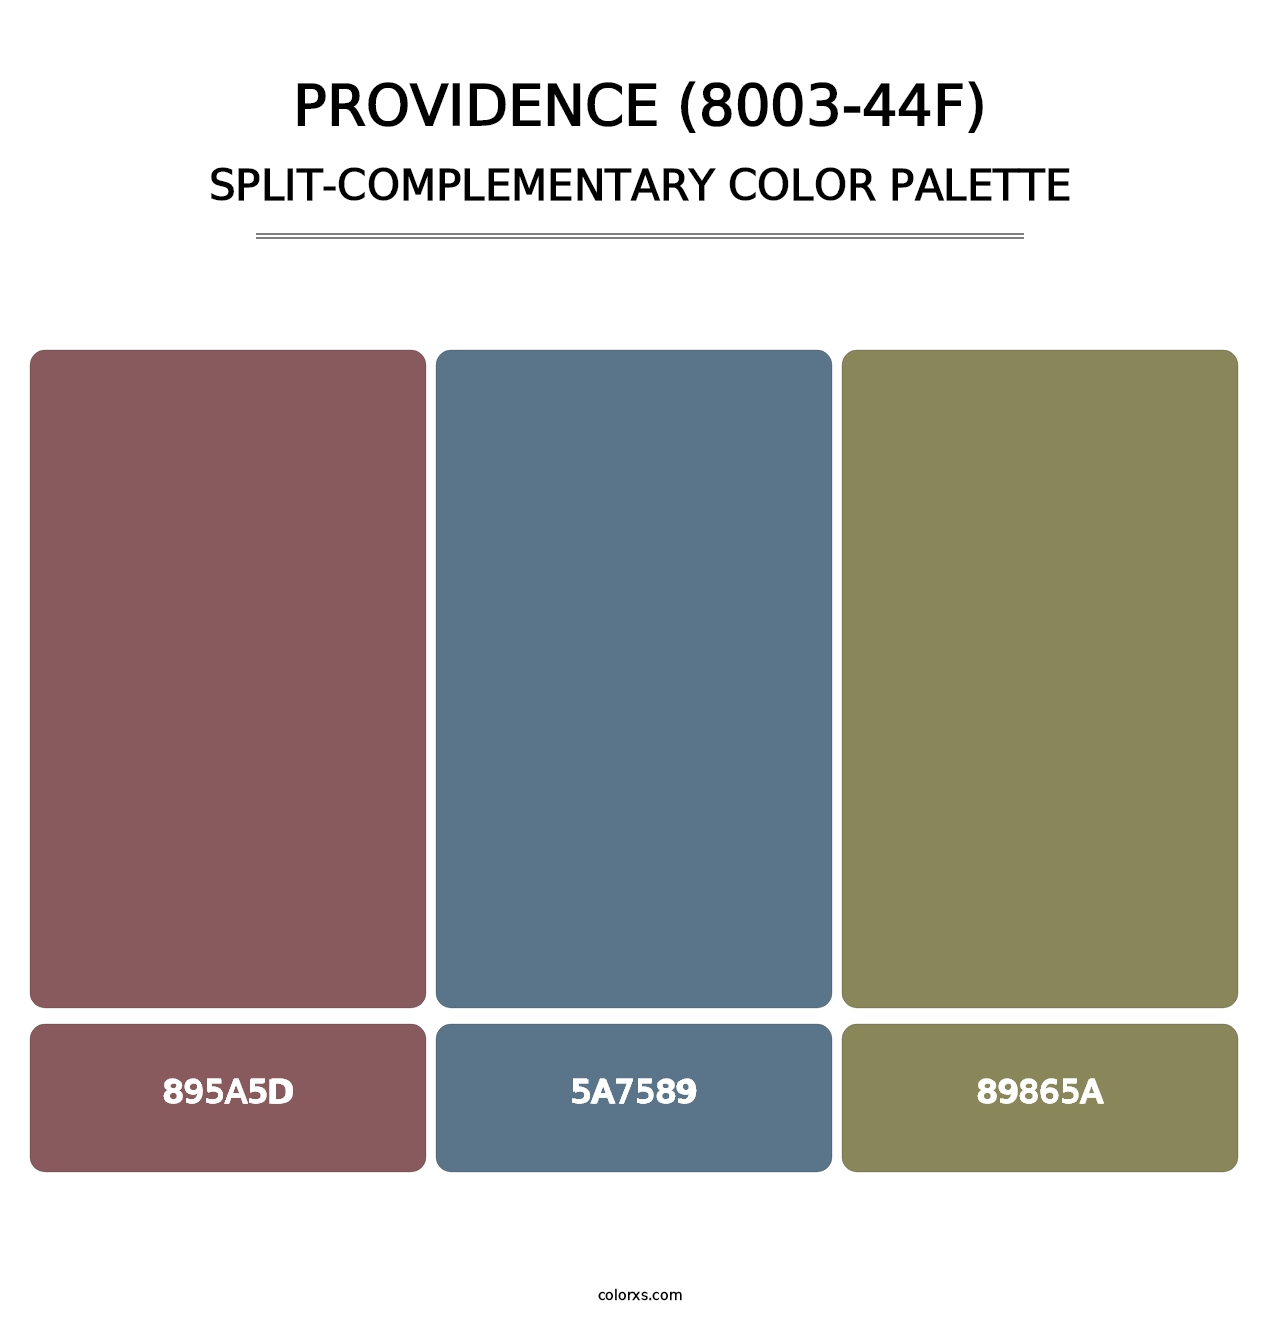 Providence (8003-44F) - Split-Complementary Color Palette